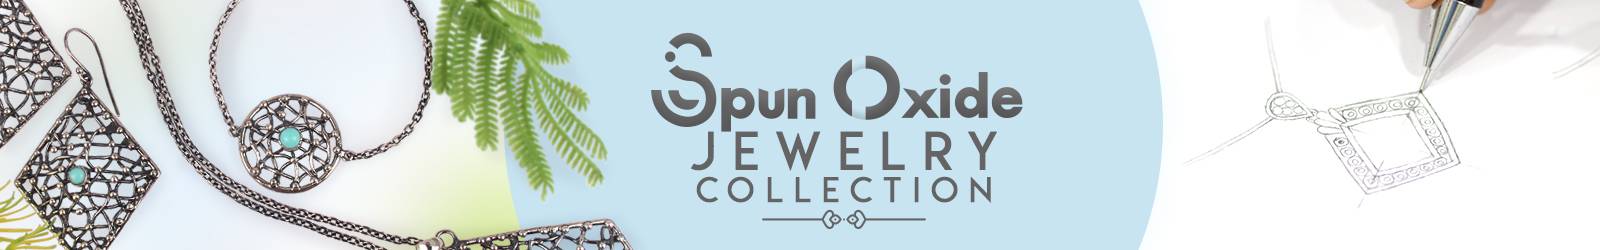 Spun Oxide Jewelry Manufacturer